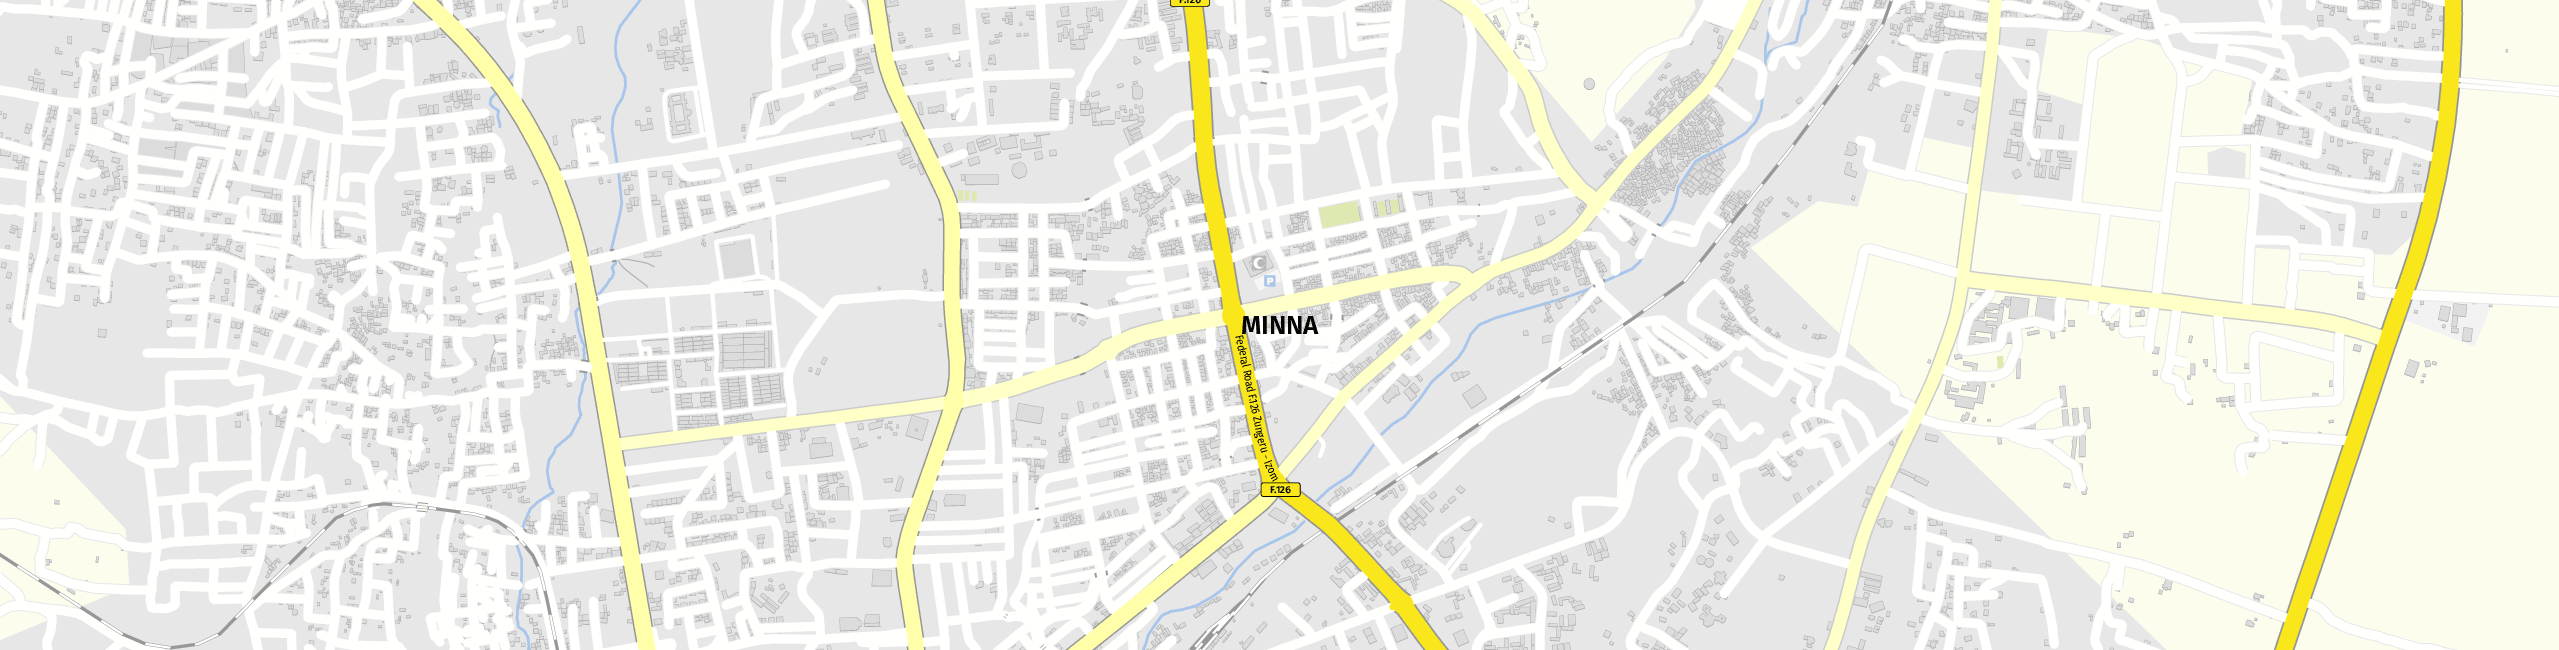 Stadtplan Minna zum Downloaden.